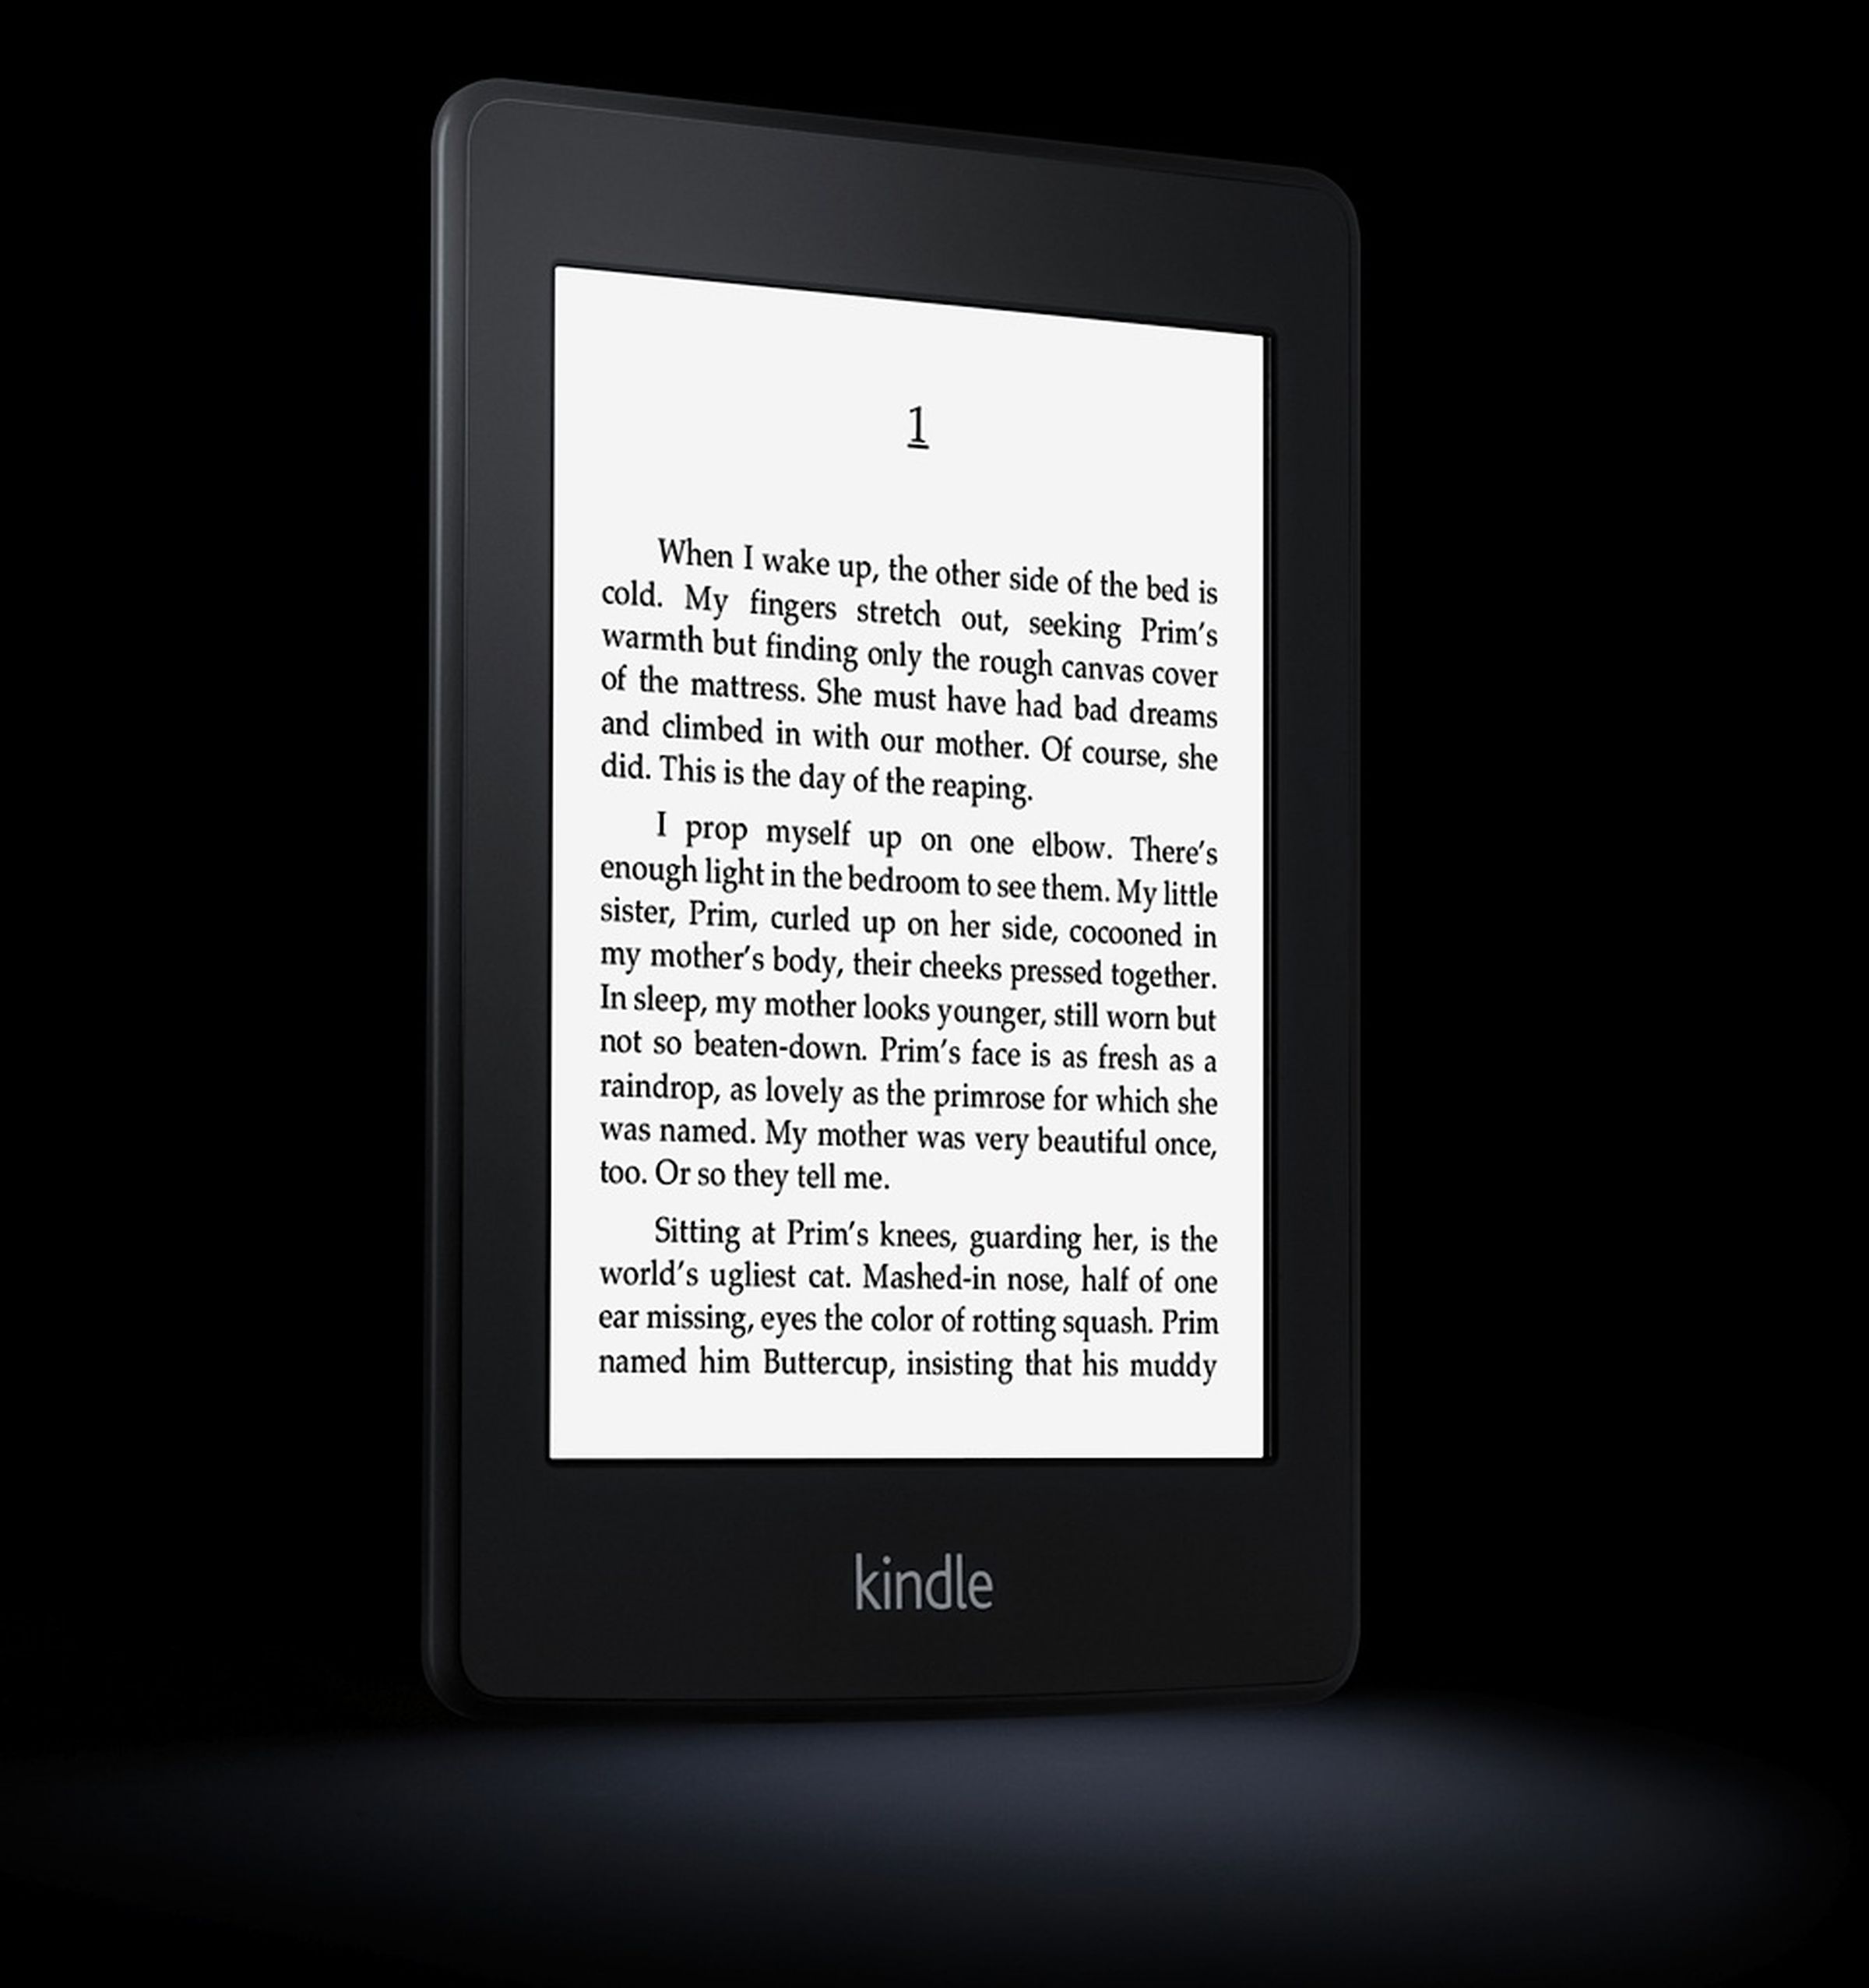 Amazon Kindle Paperwhite press images